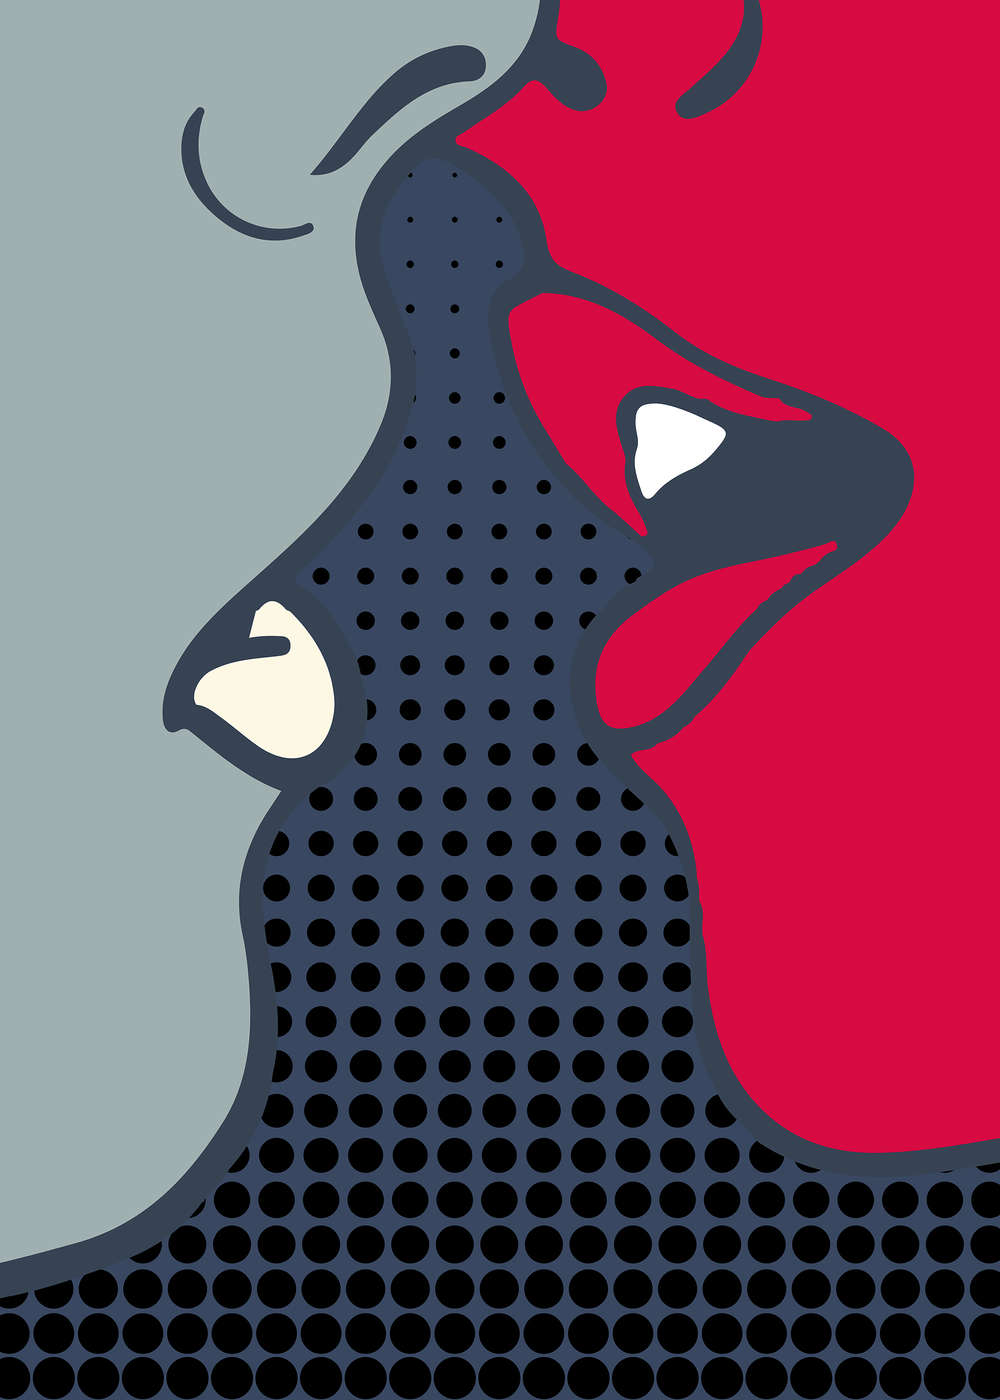             The Kiss Fototapete Pop Art Design – Blau, Rot
        